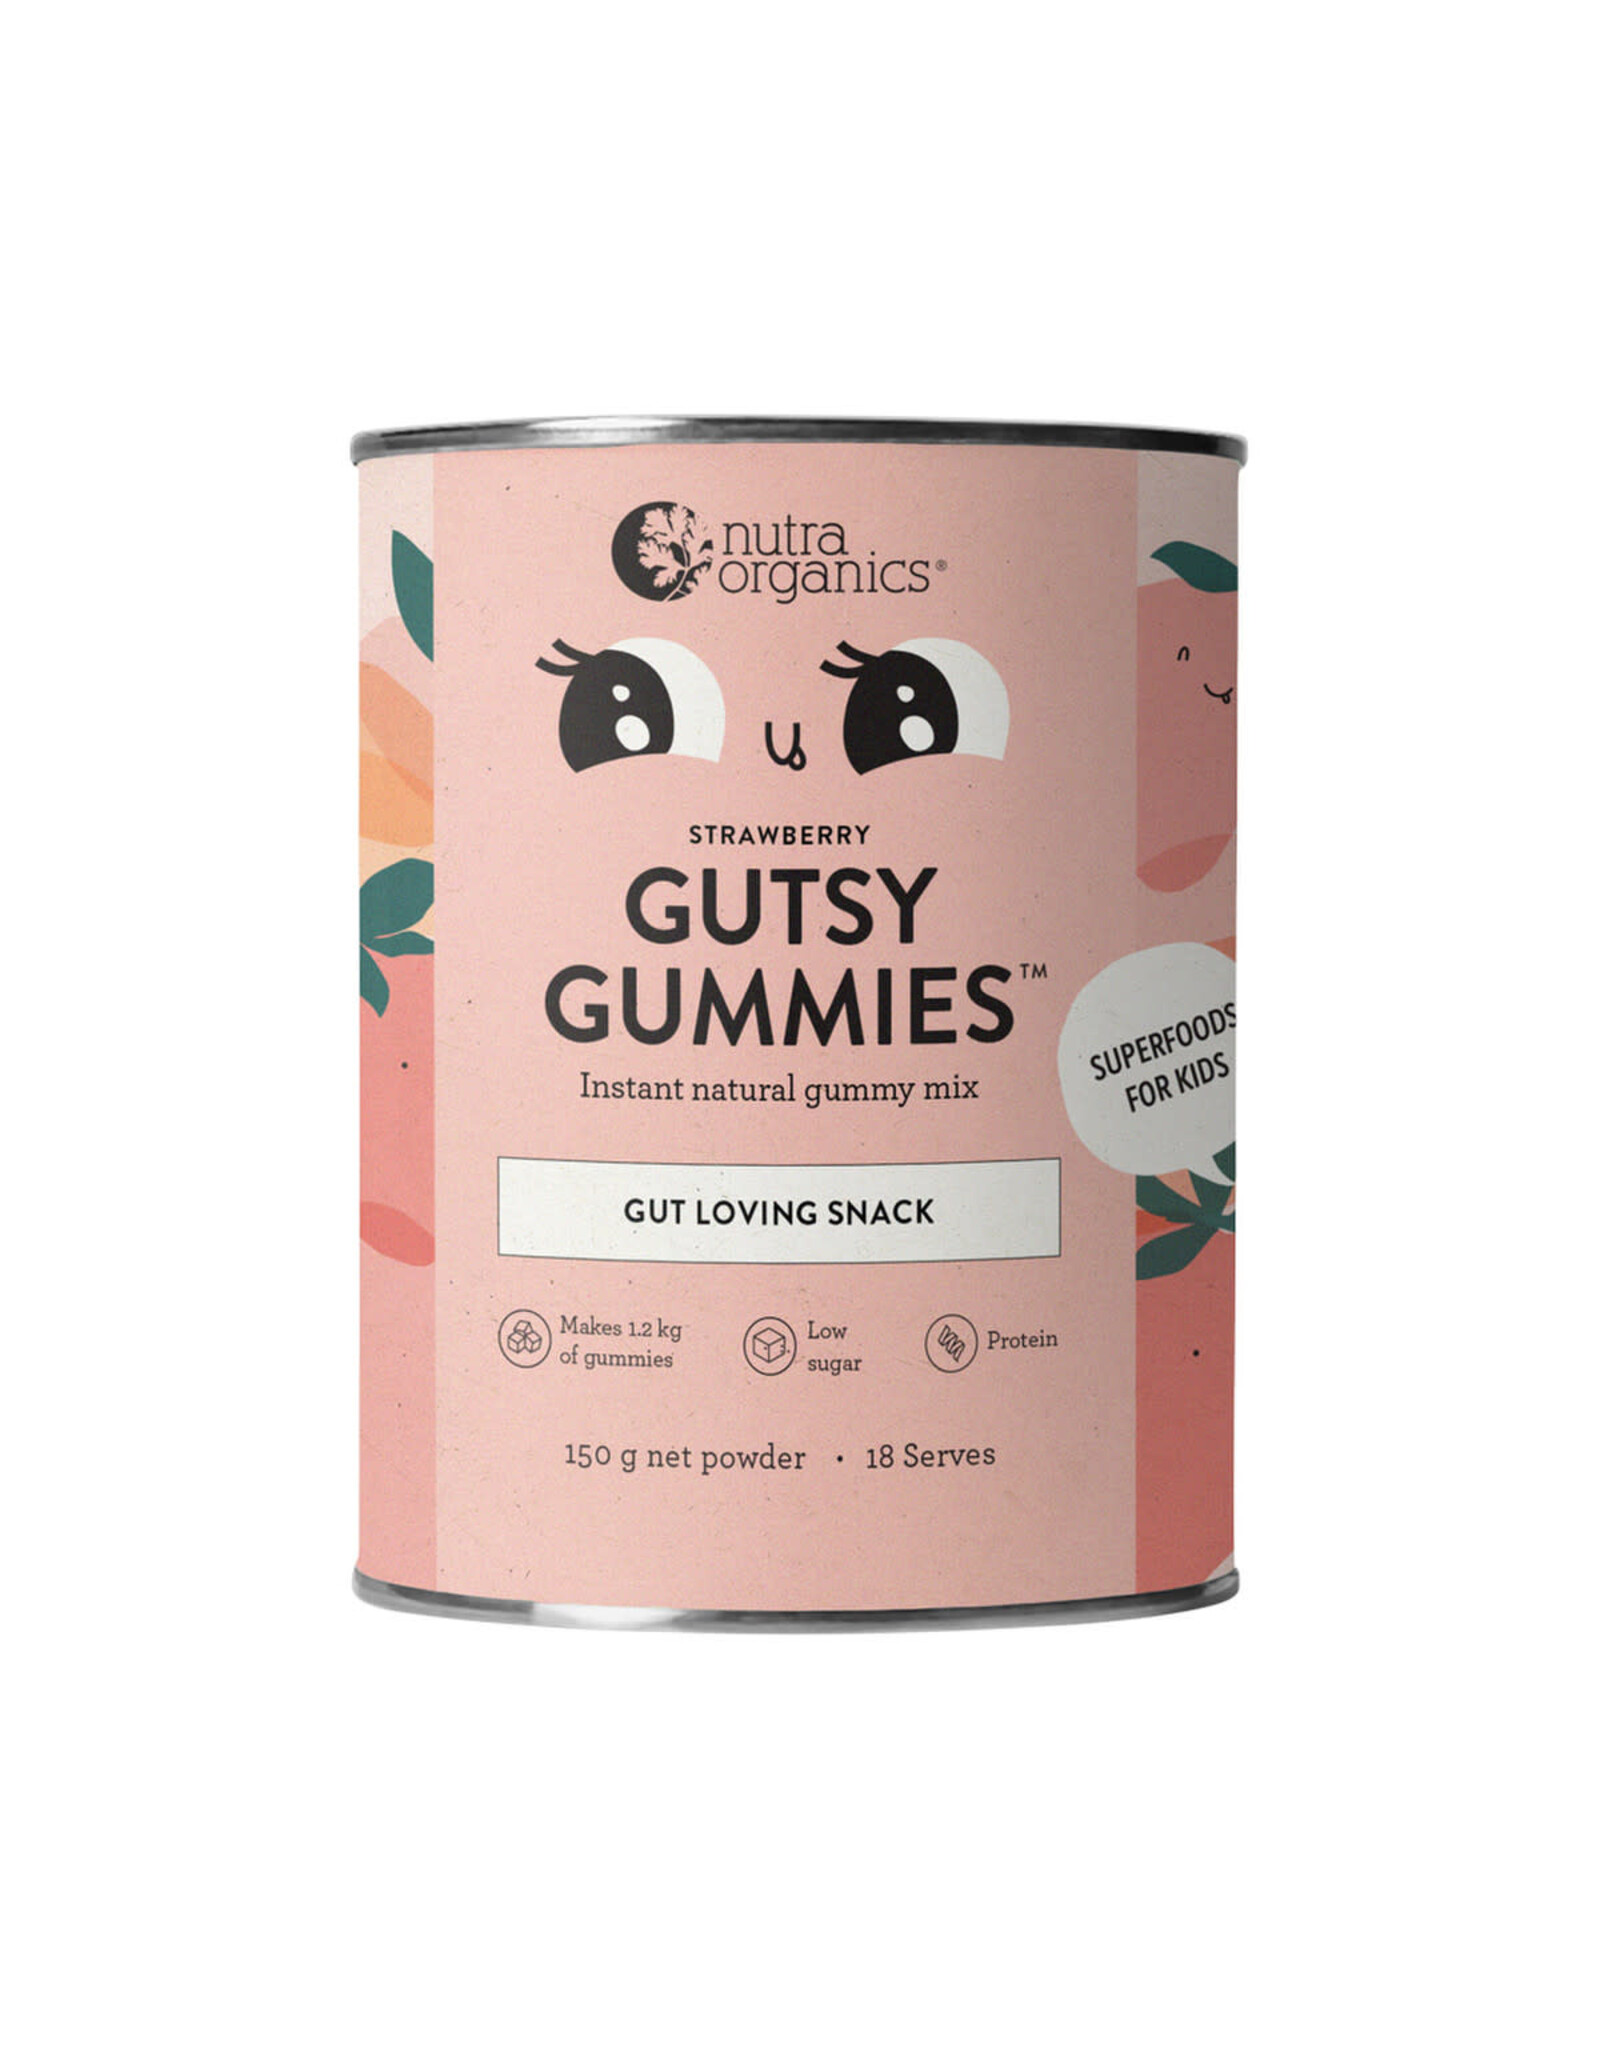 NutraOrganics Gutsy Gummies (Gut Loving Snack) Strawberry 150g